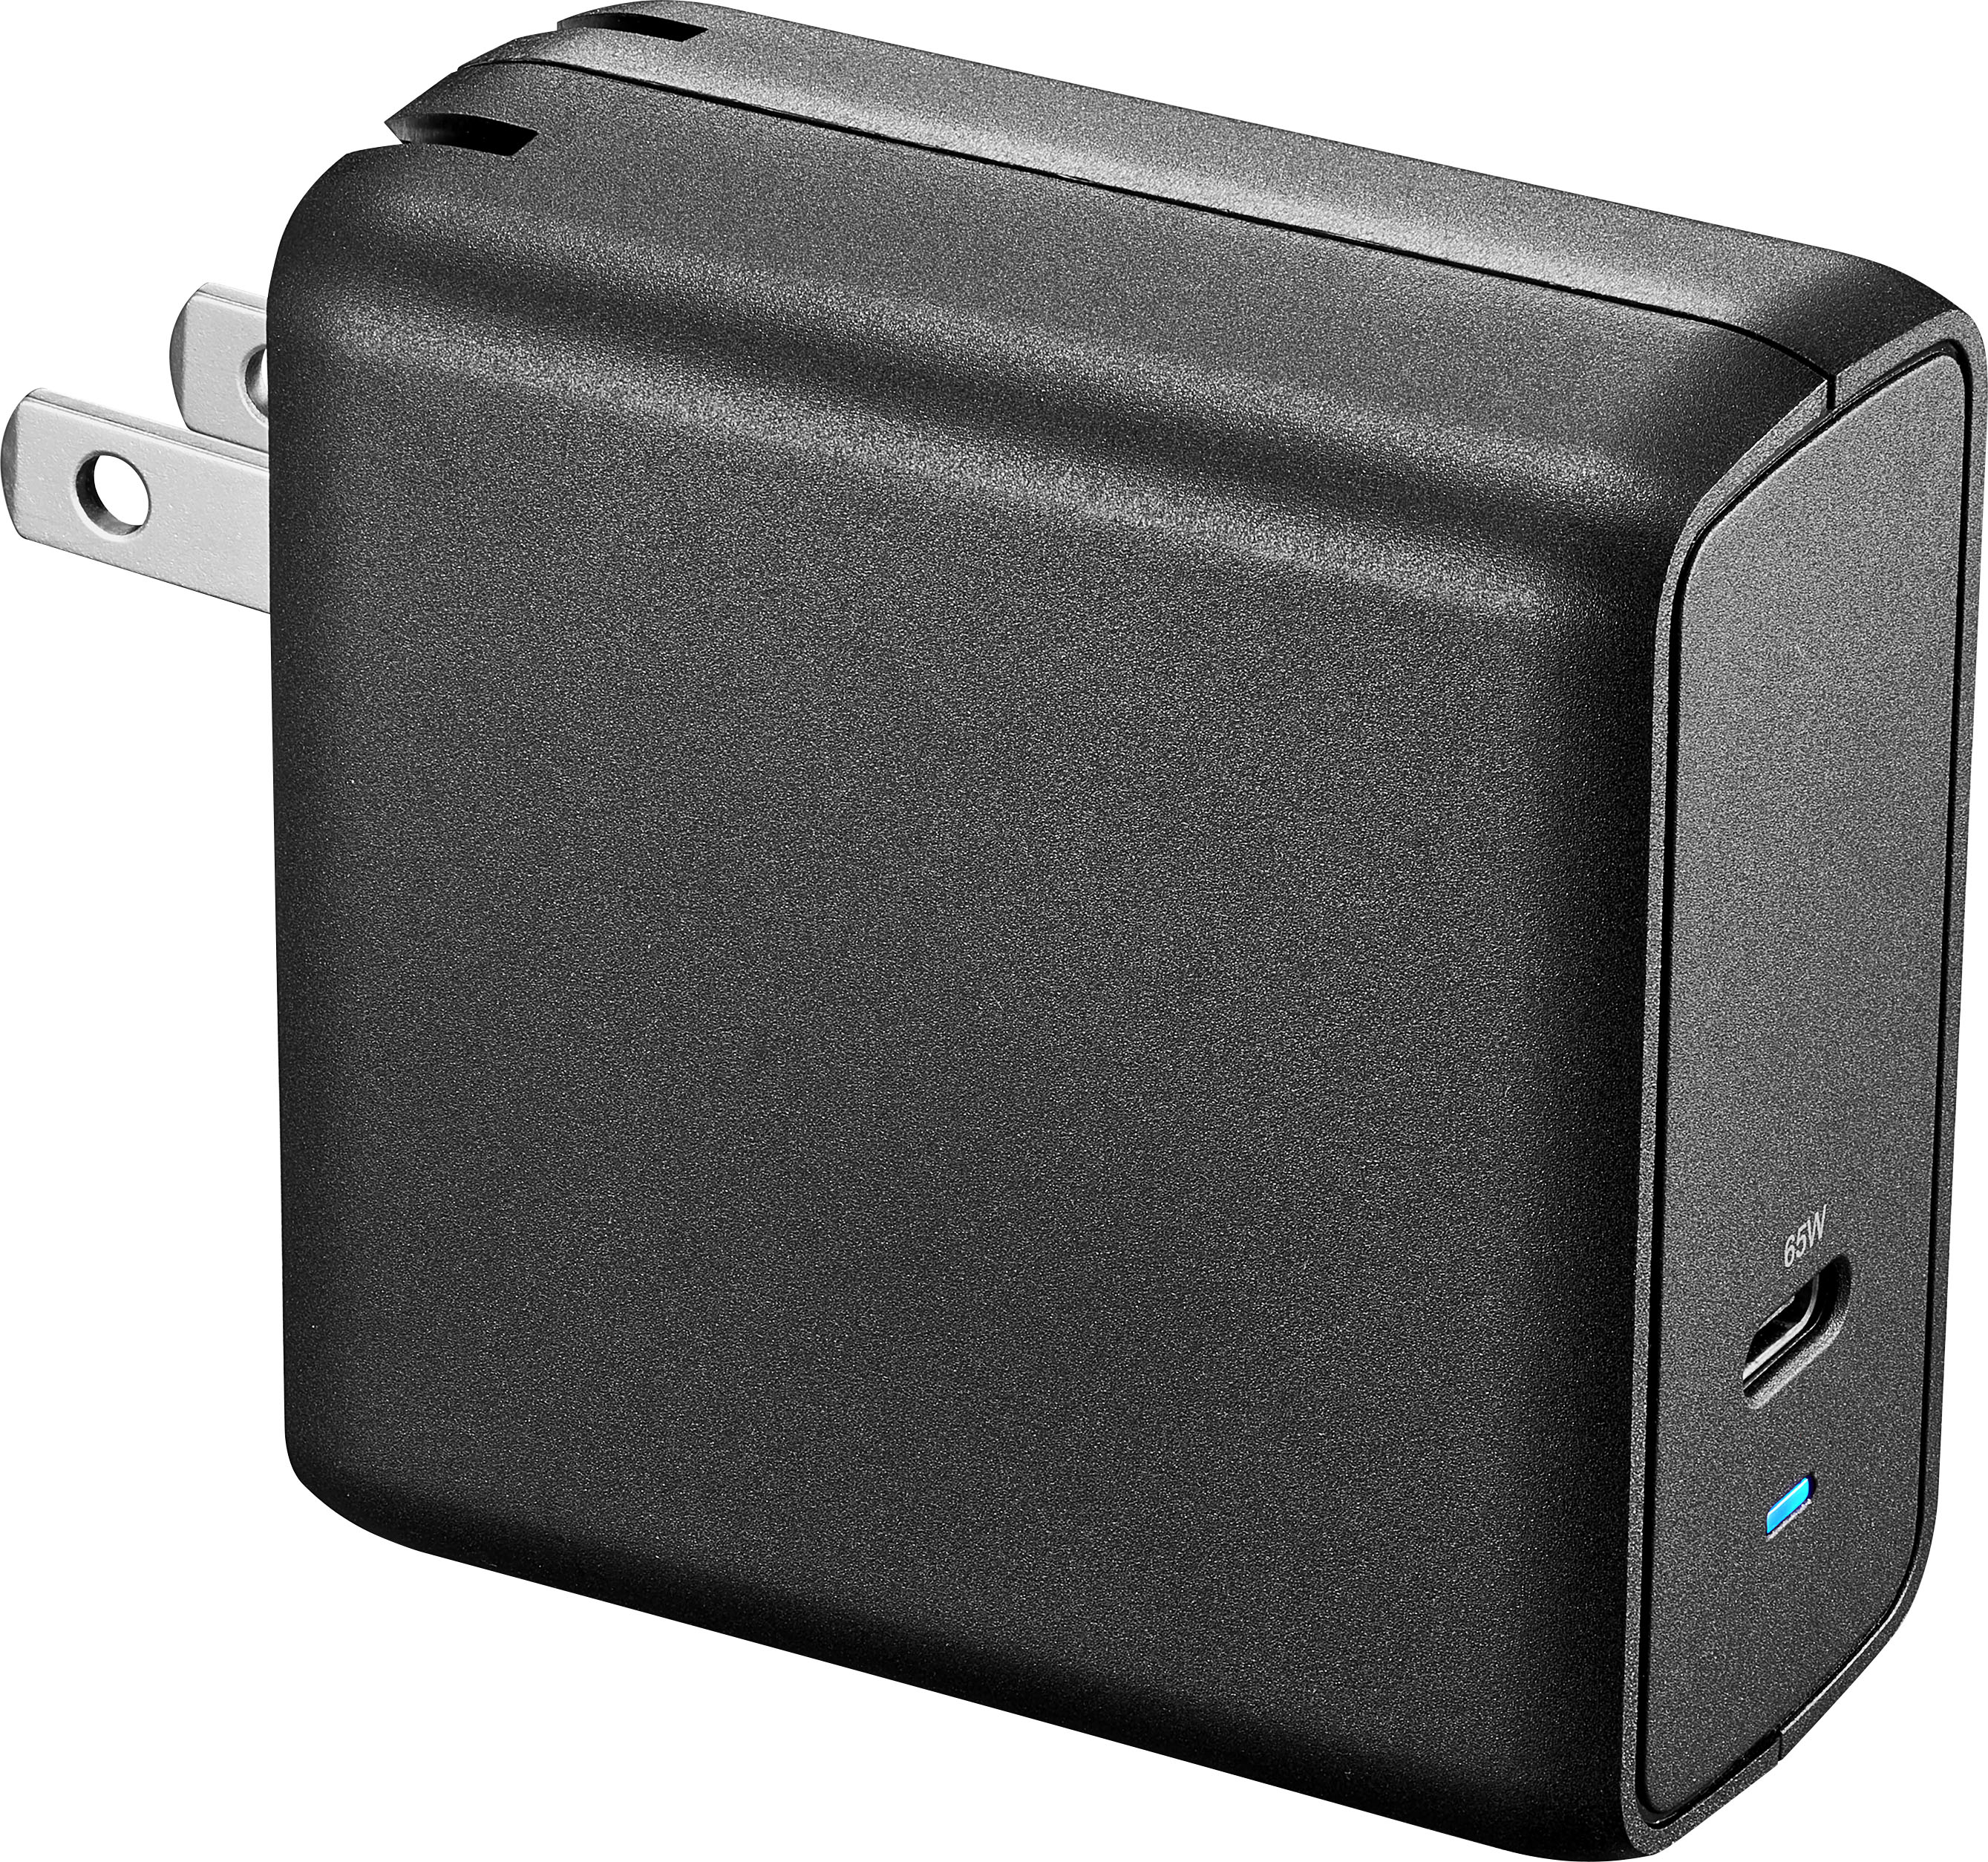 macbook air charger - Best Buy